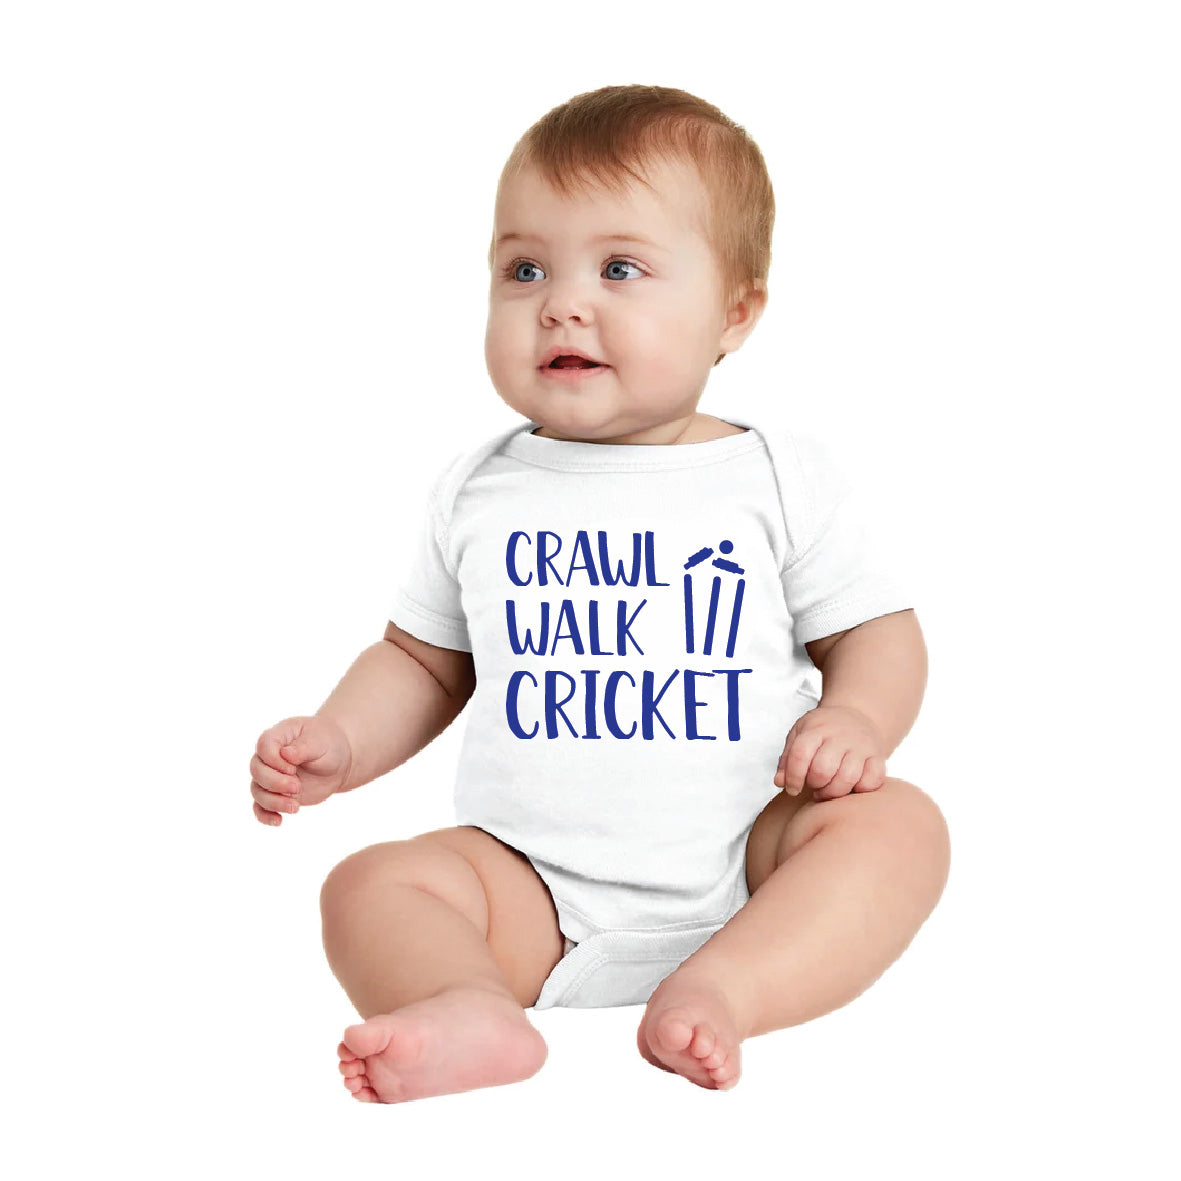 Crawl Walk Cricket Onesie/Tshirt